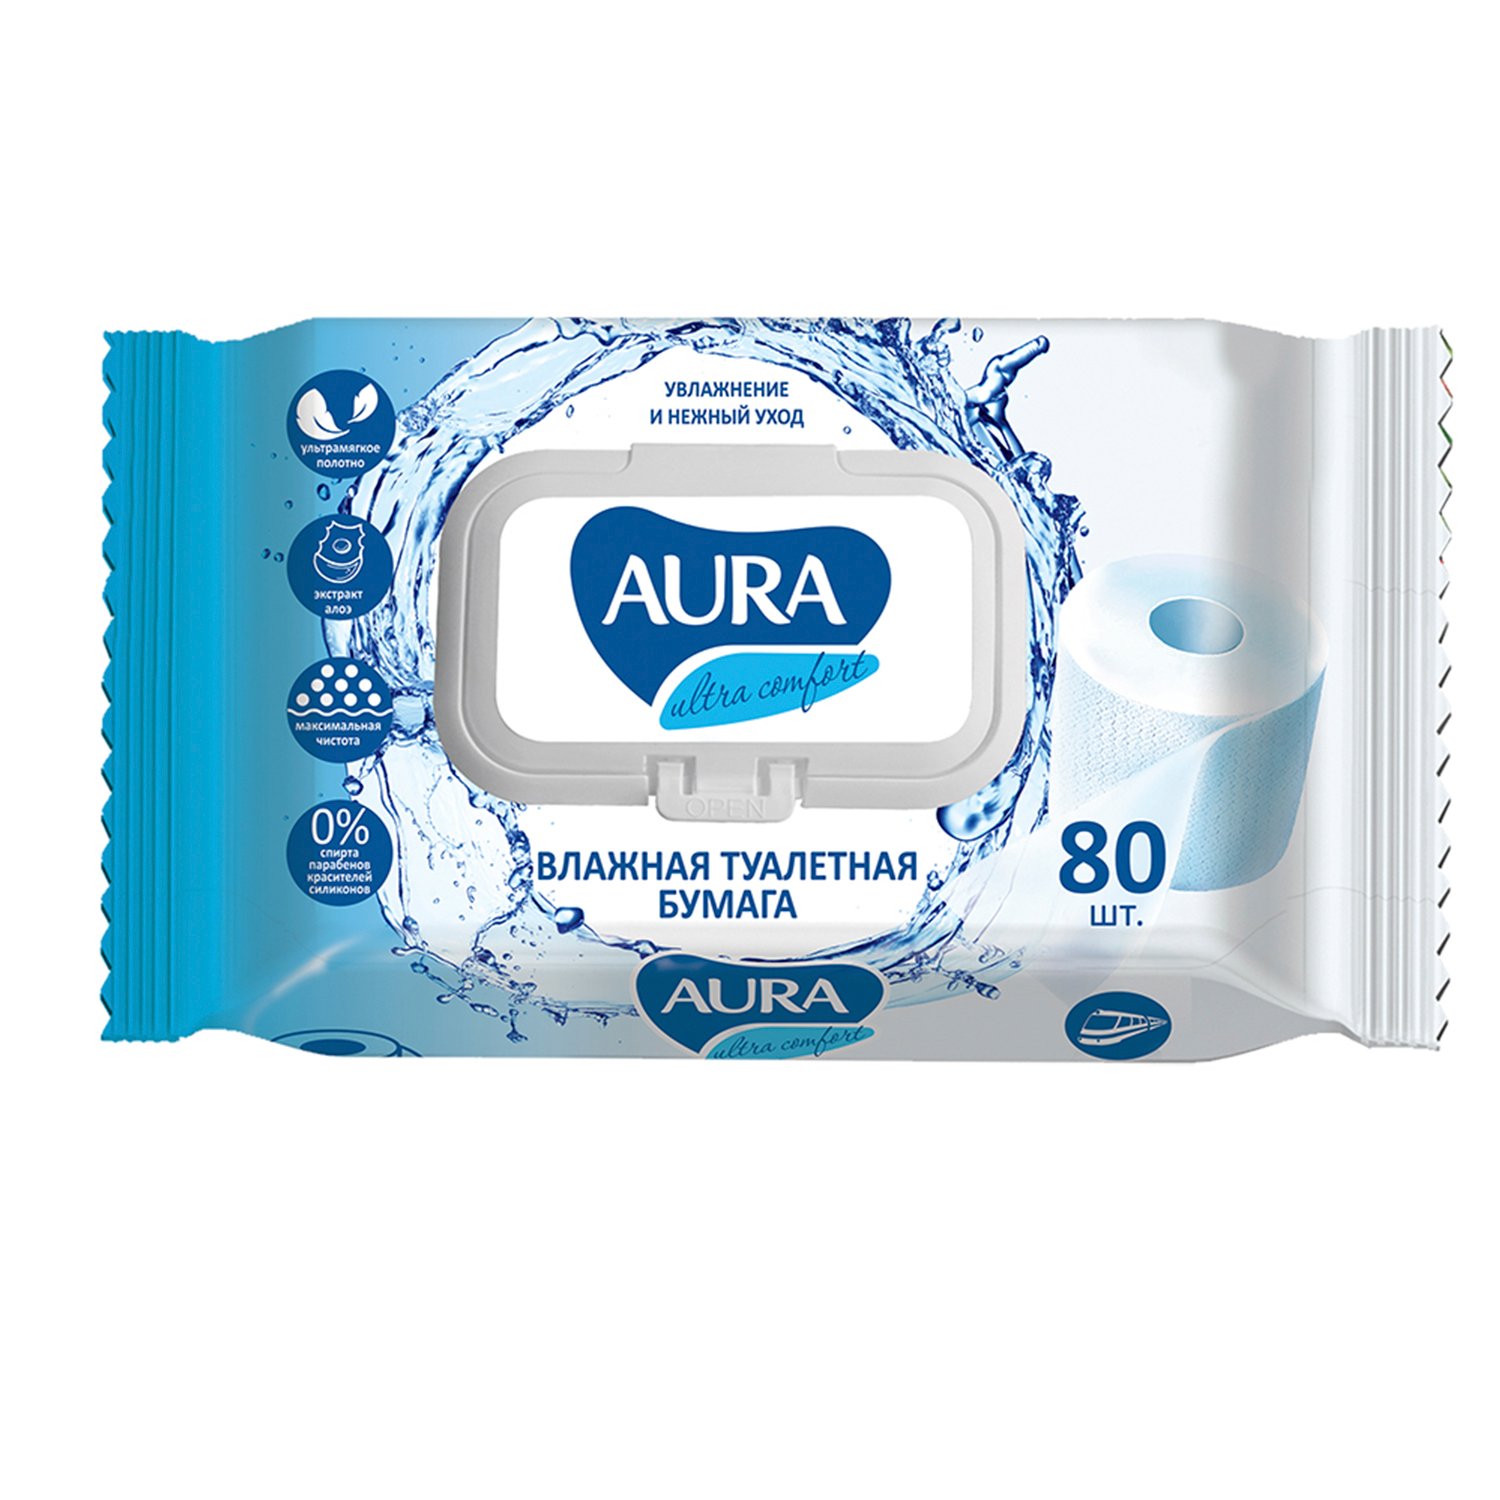  туалетная бумага AURA с крышкой 80шт:  по цене 186 ₽ в .